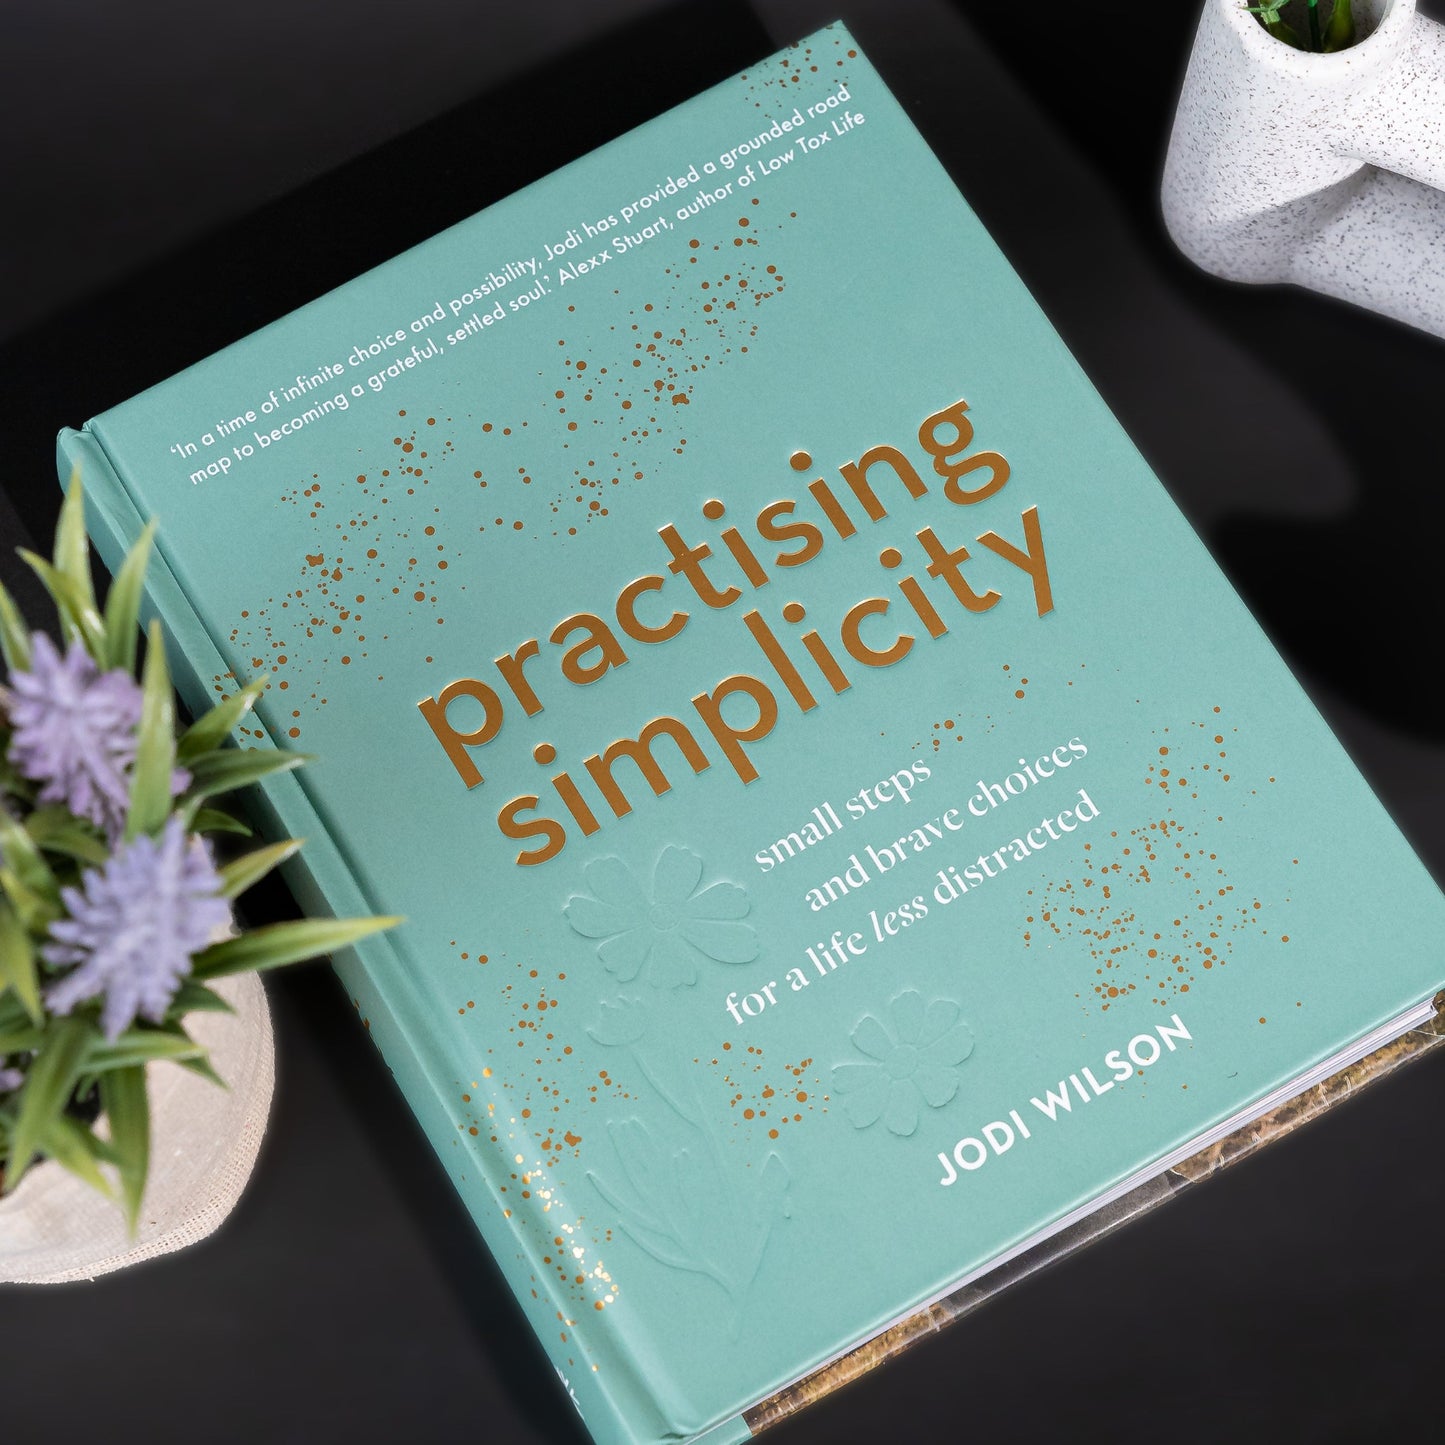 Practising Simplicity by Jodi Wilson